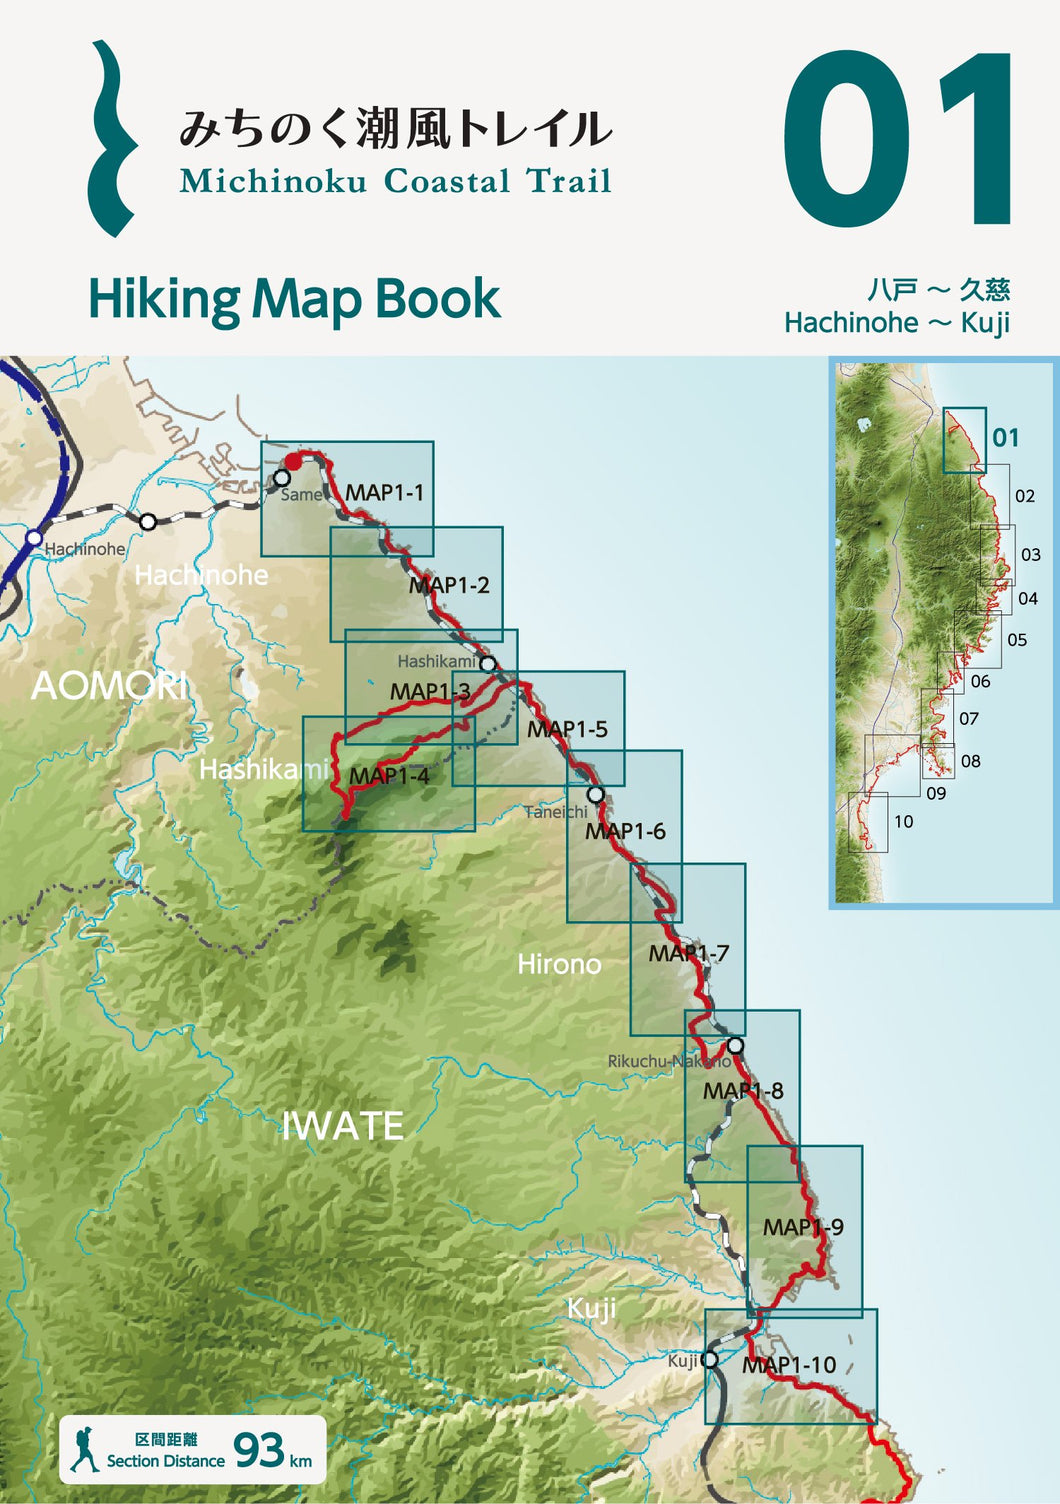 Hiking Map Book